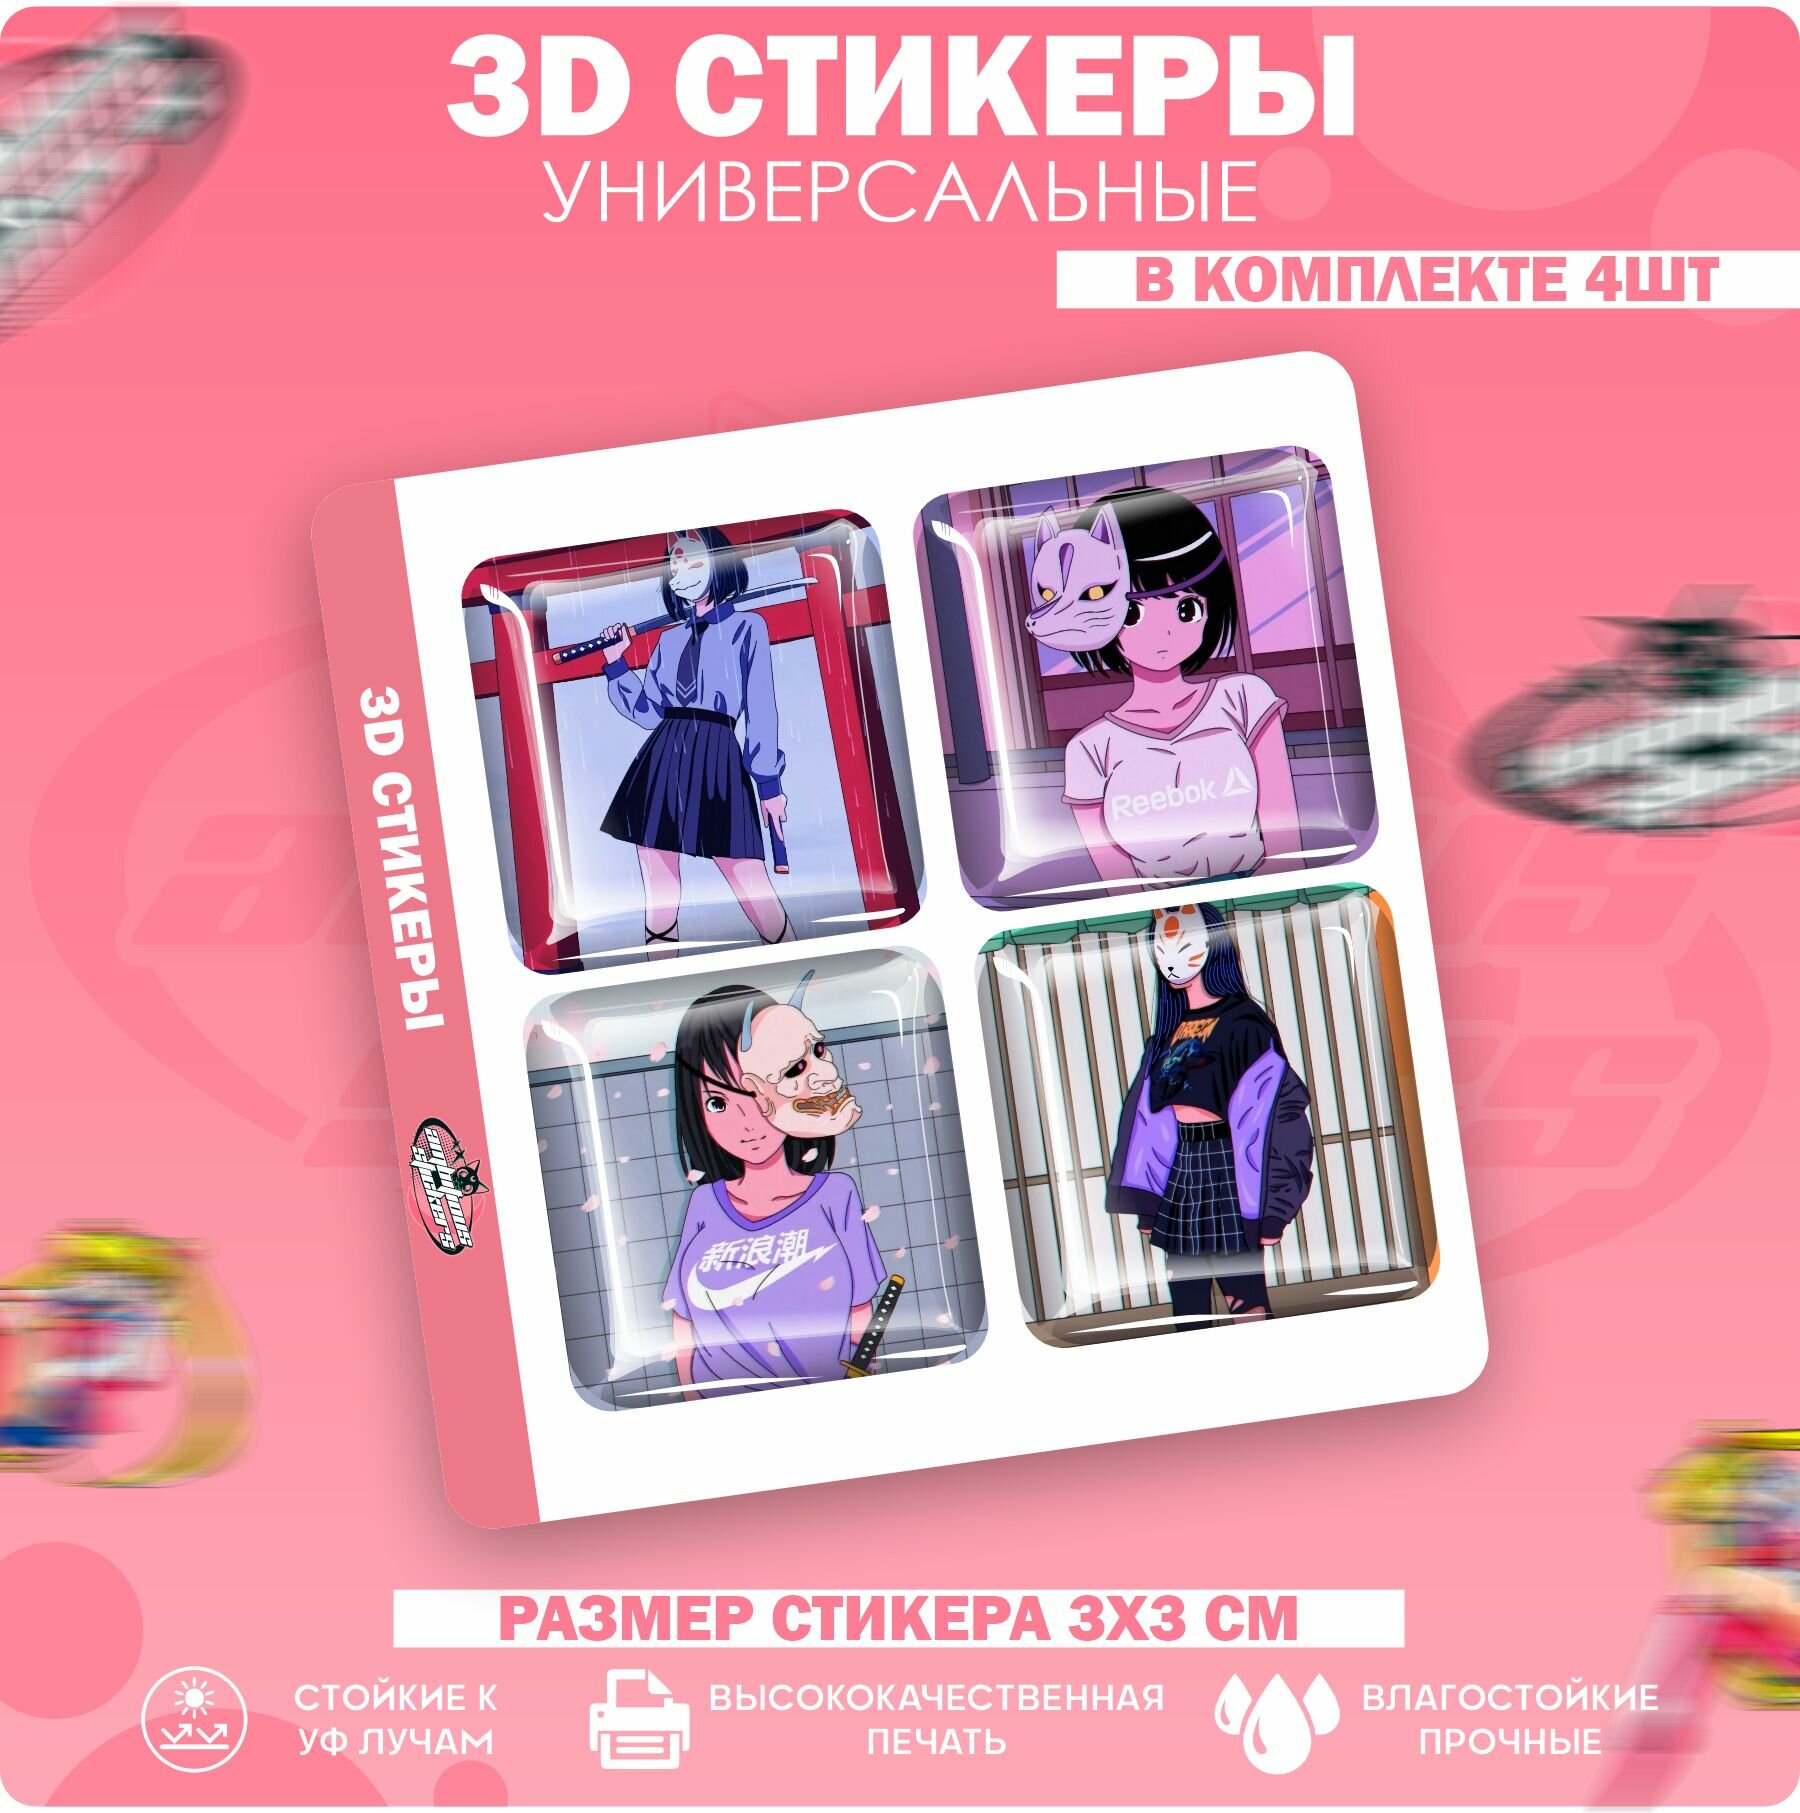 3D стикеры наклейки на телефон Аниме девушки